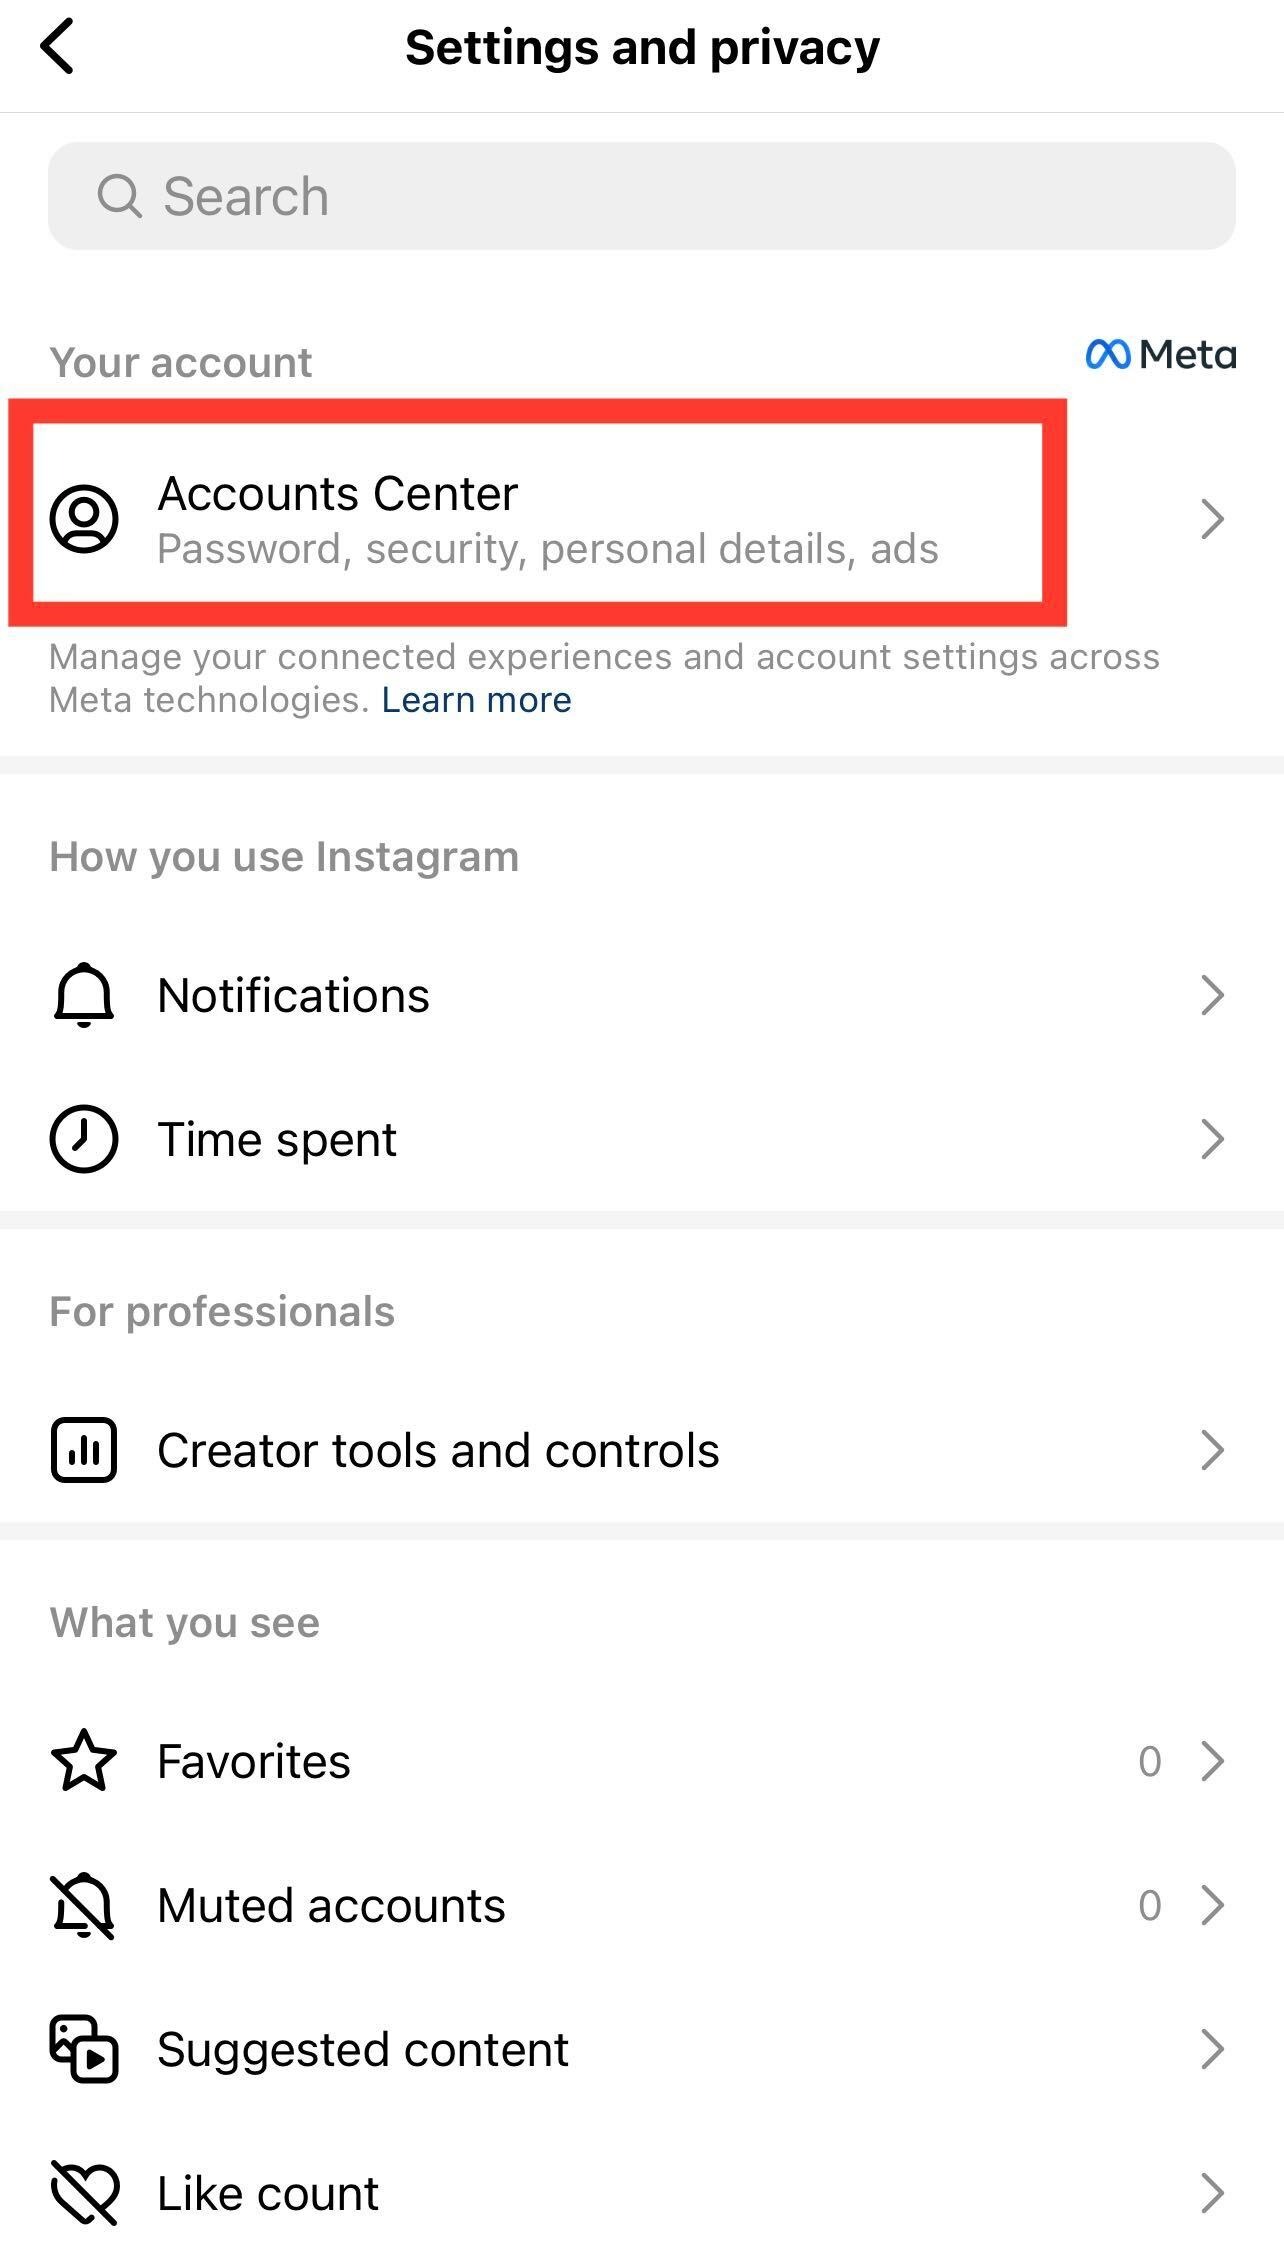 settings & privacy I - Account Center.jpg